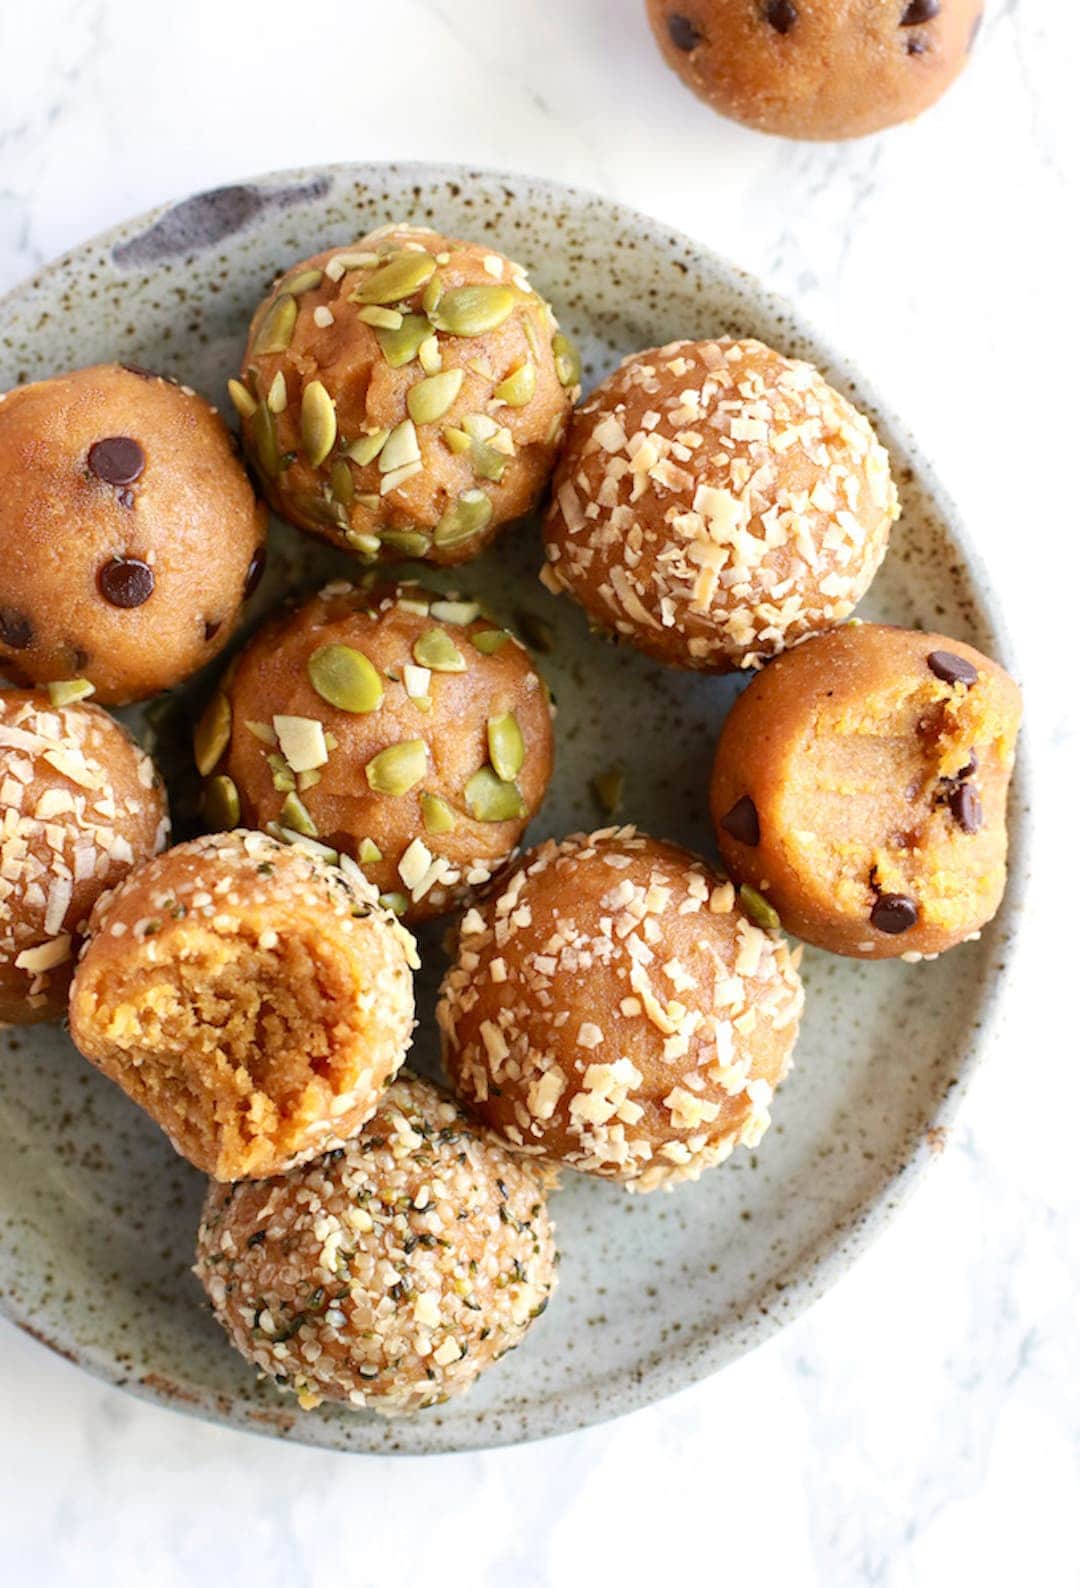 10 Terrific & Simple Healthy Fall Recipes - Pumpkin Pie Energy Balls